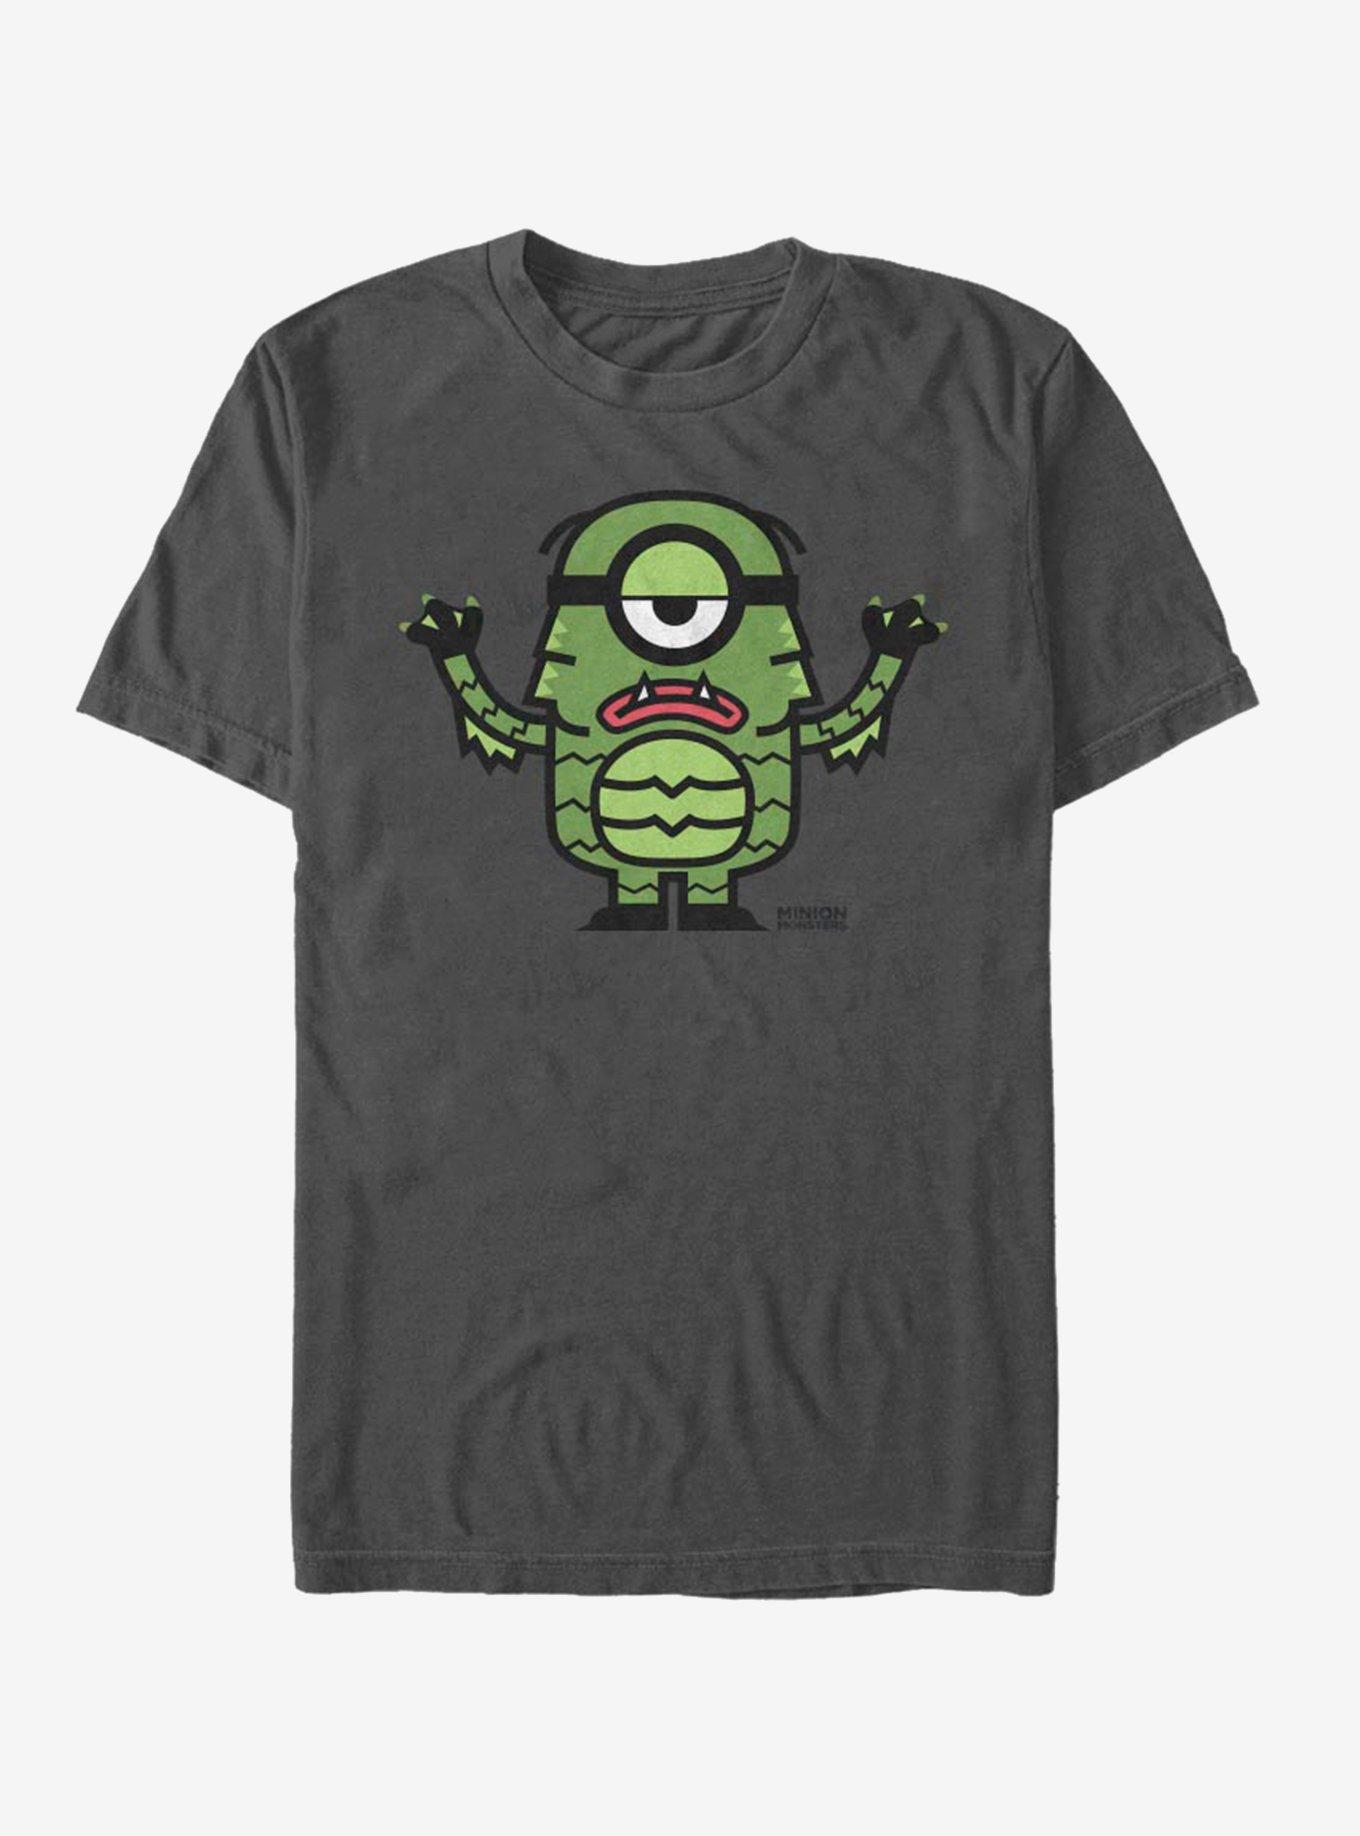 Minion Creature T-Shirt, CHARCOAL, hi-res